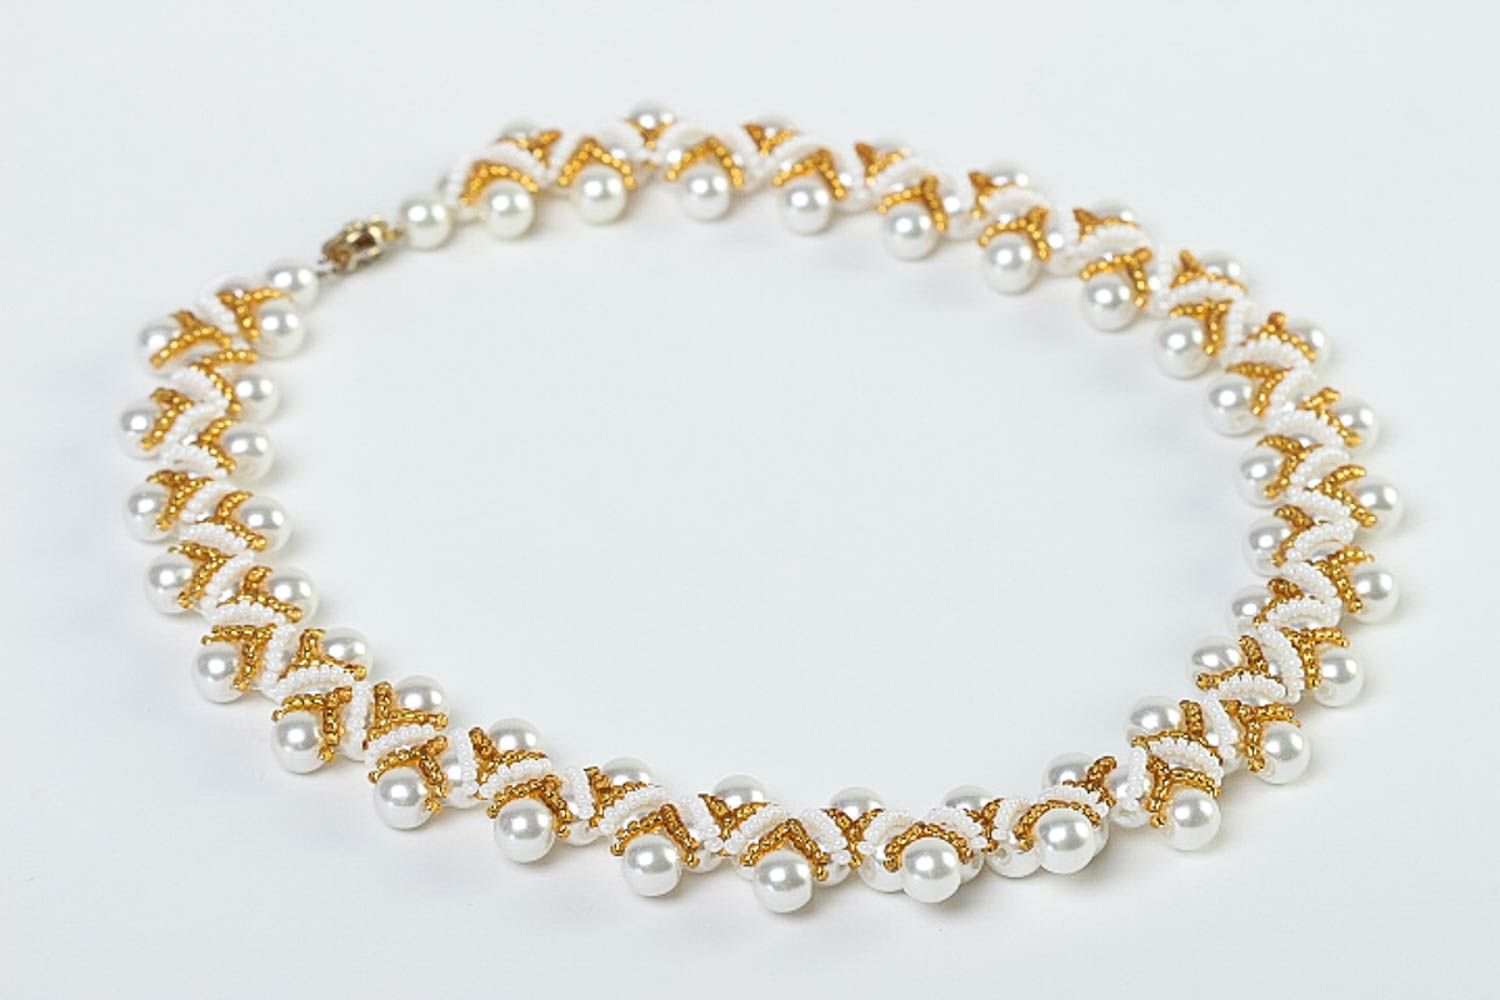 Beautiful handmade beaded necklace artisan jewelry designs bead weaving ideas photo 2